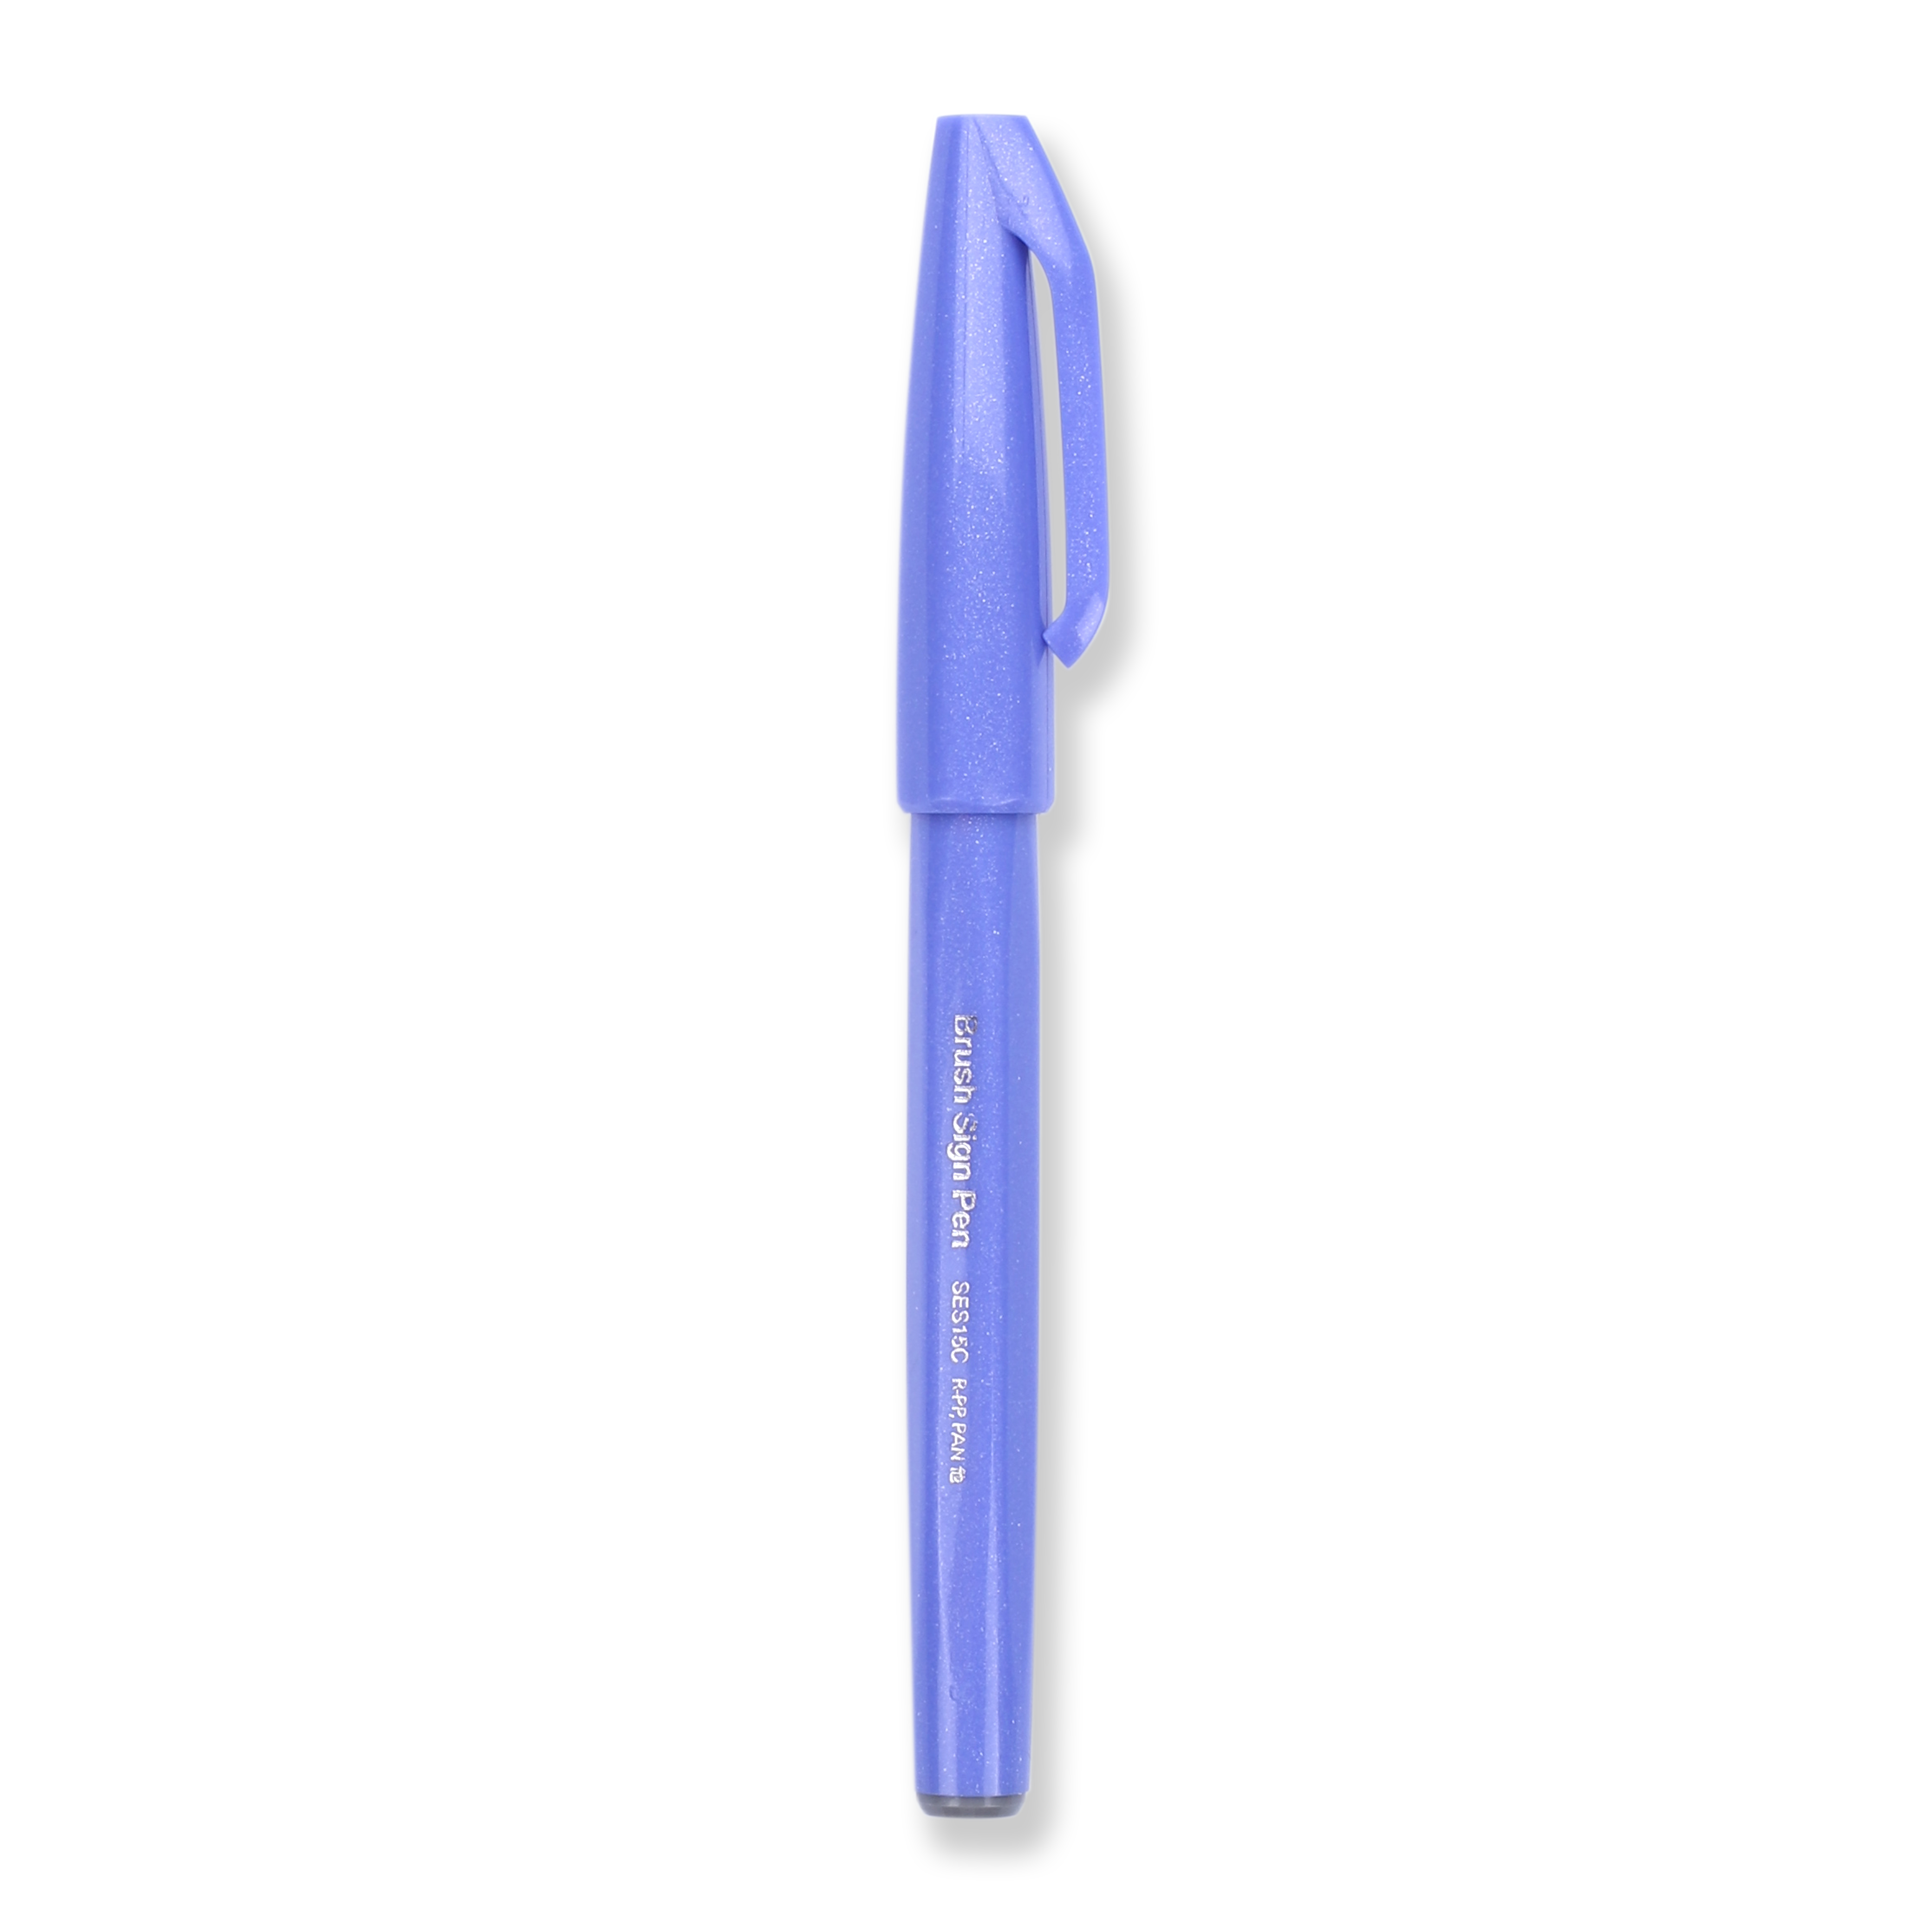 Bolígrafo Pentel Fude Touch Brush Sign - Azul Violeta - Nuevos colores 2020